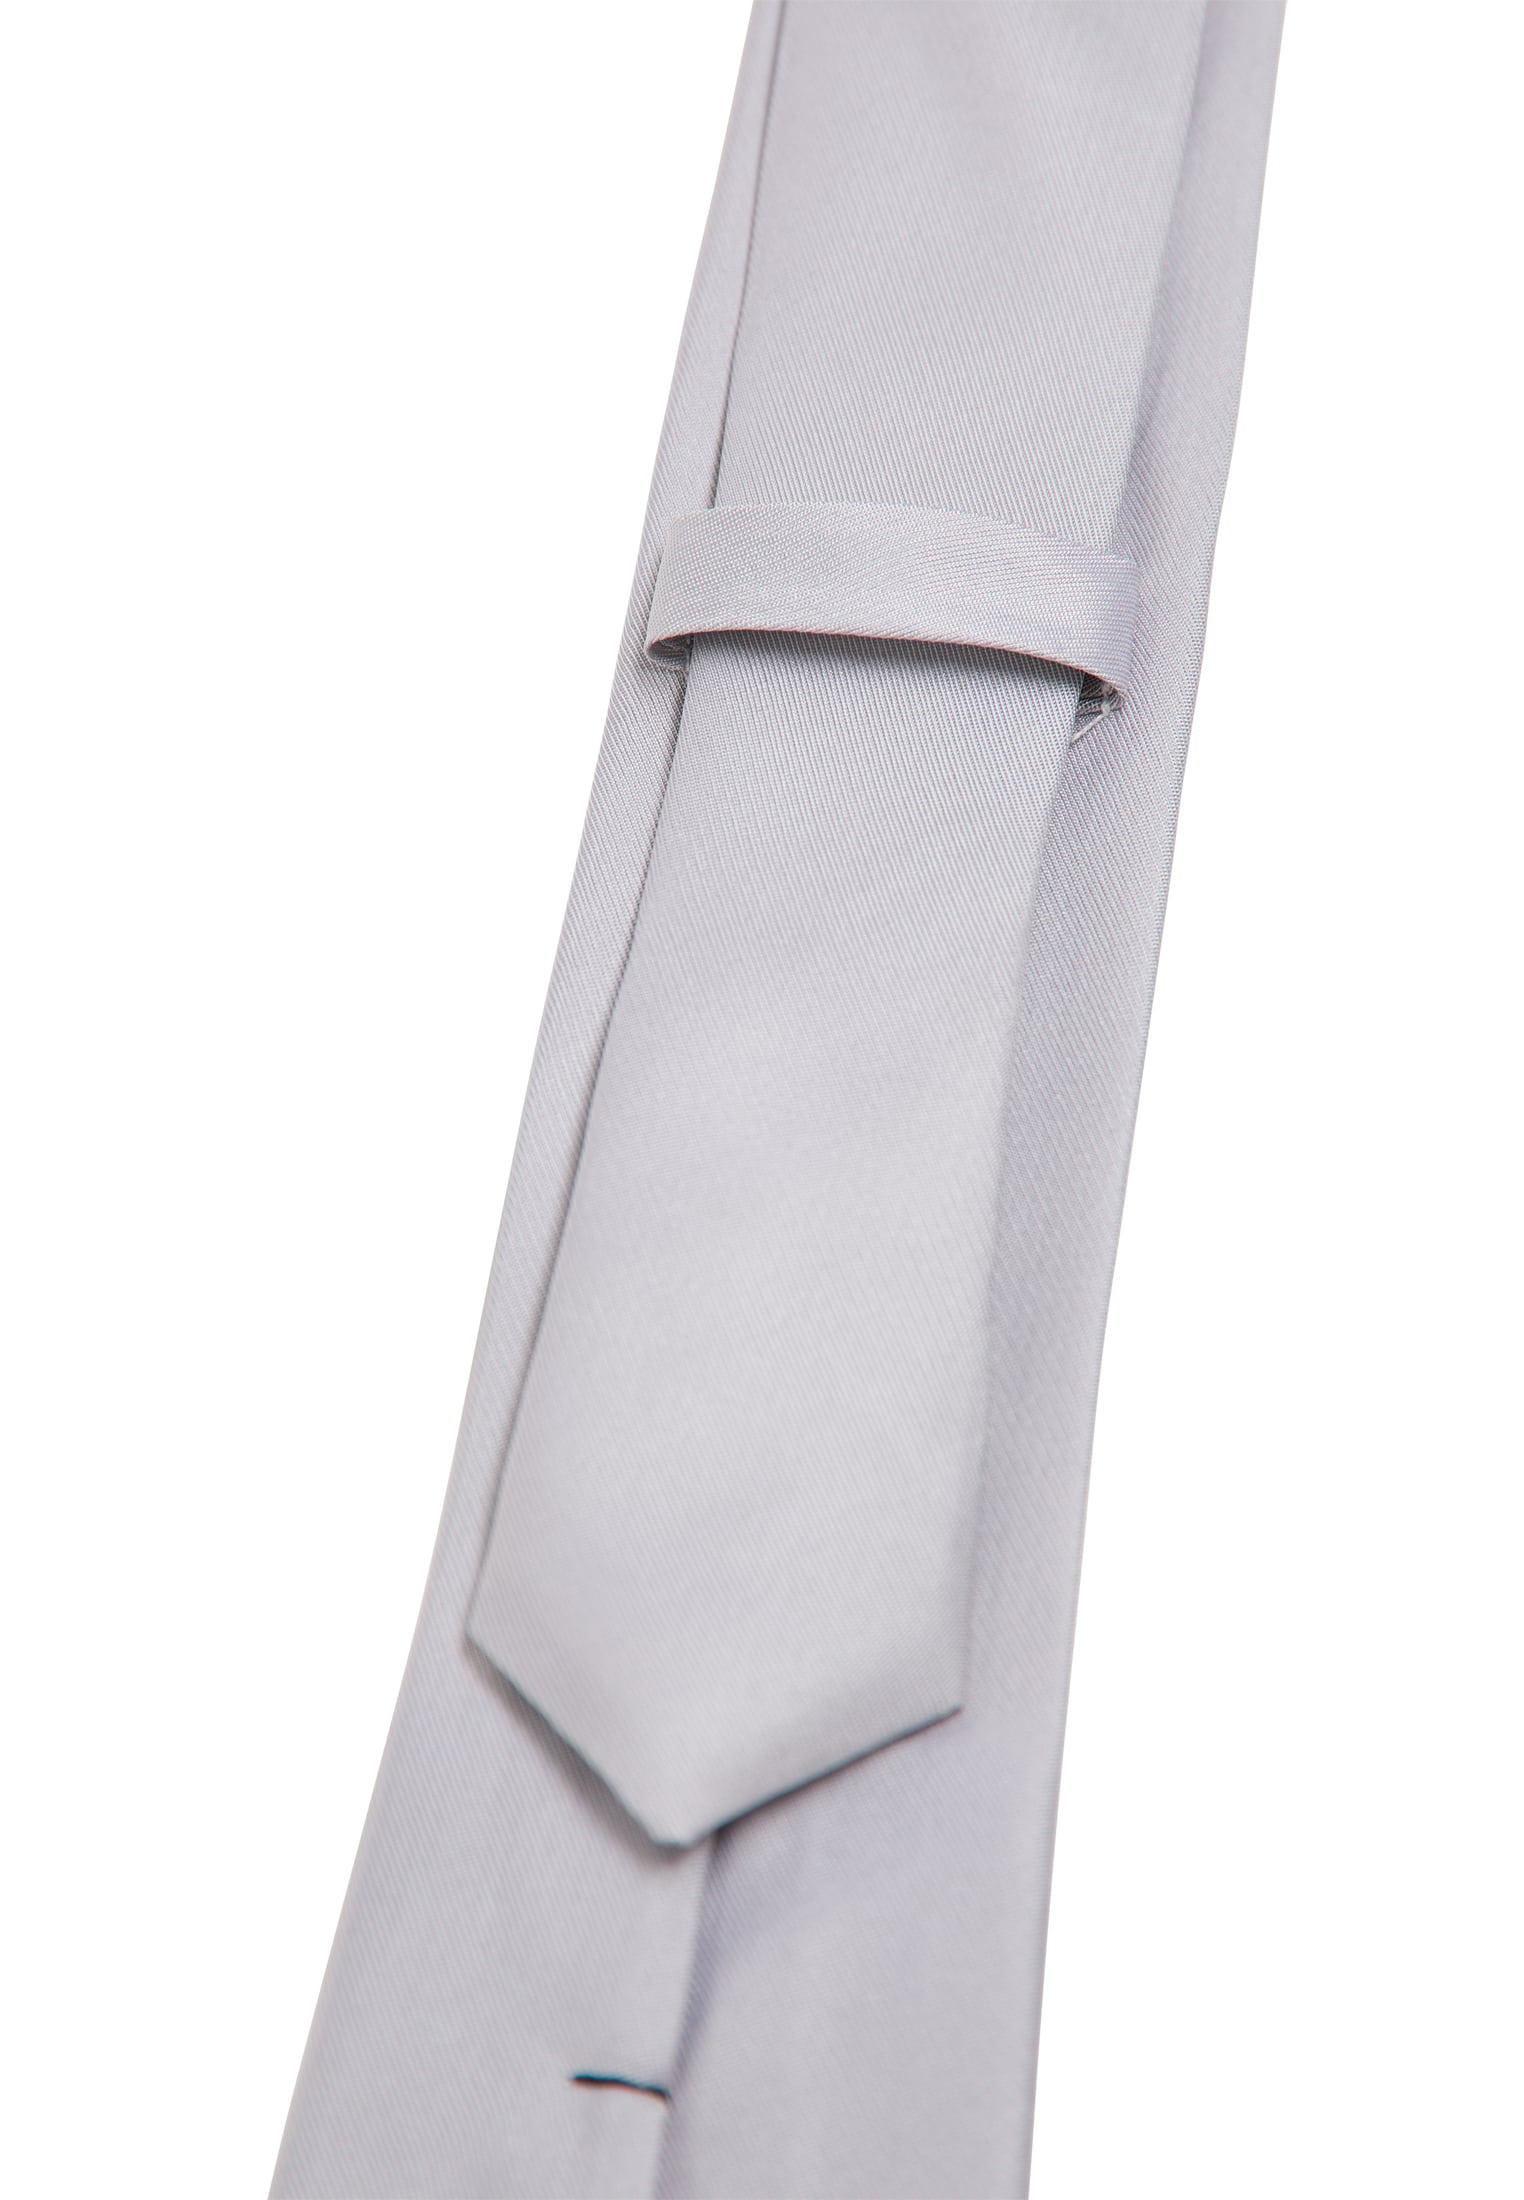 Krawatte in silber unifarben 1AC02085-03-11-142 142 silber | | 